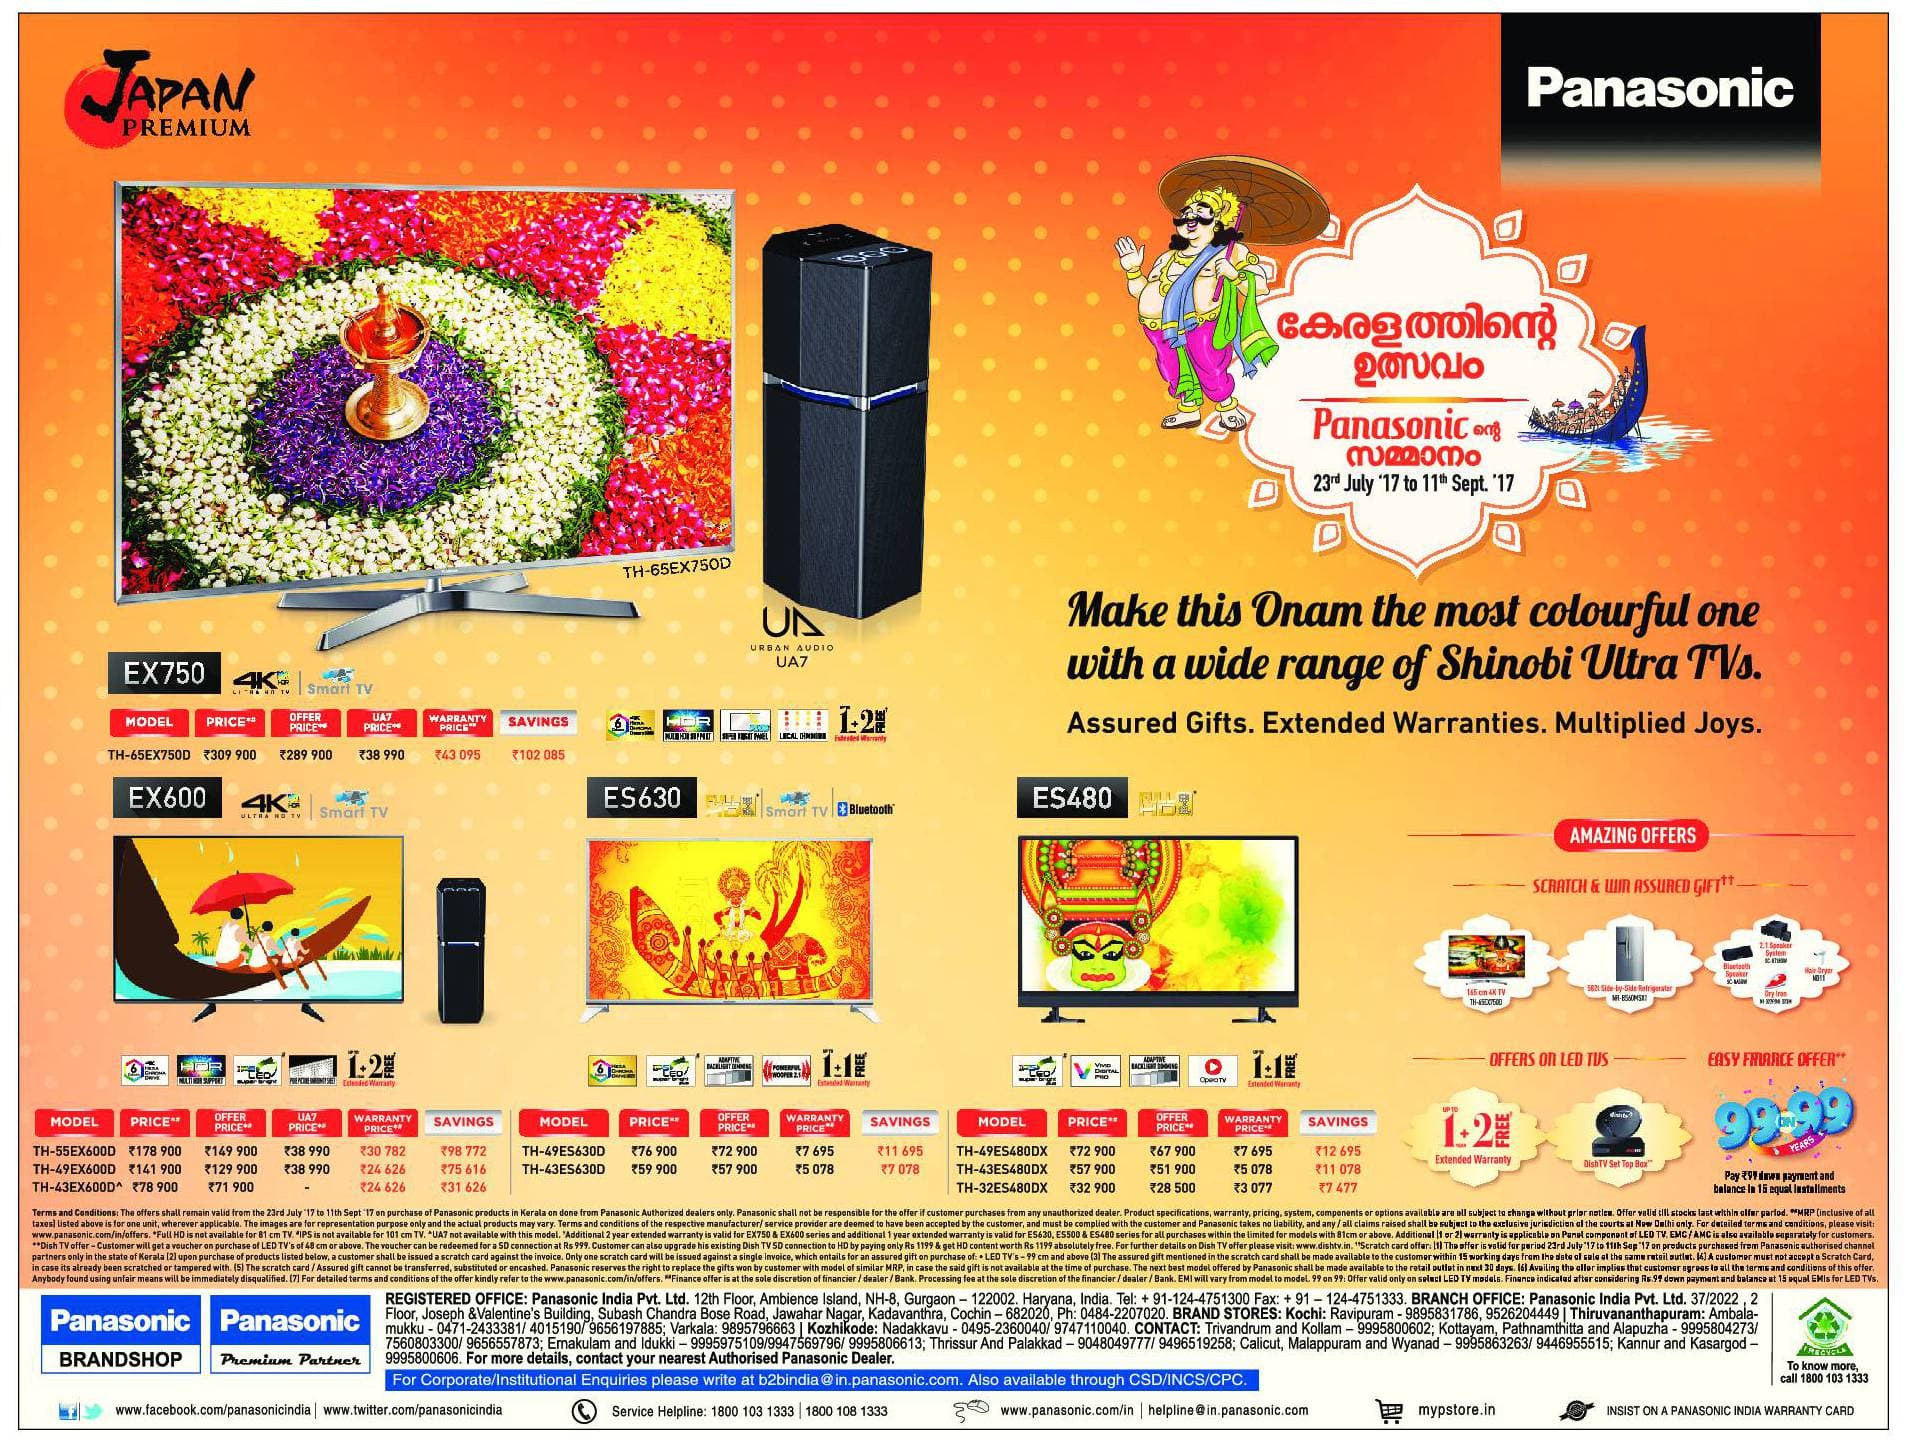 Panasonic Refregirators Tv Make This Onam The Most Colourful One With A Wide Range Of Shionbi Ultra Tv 